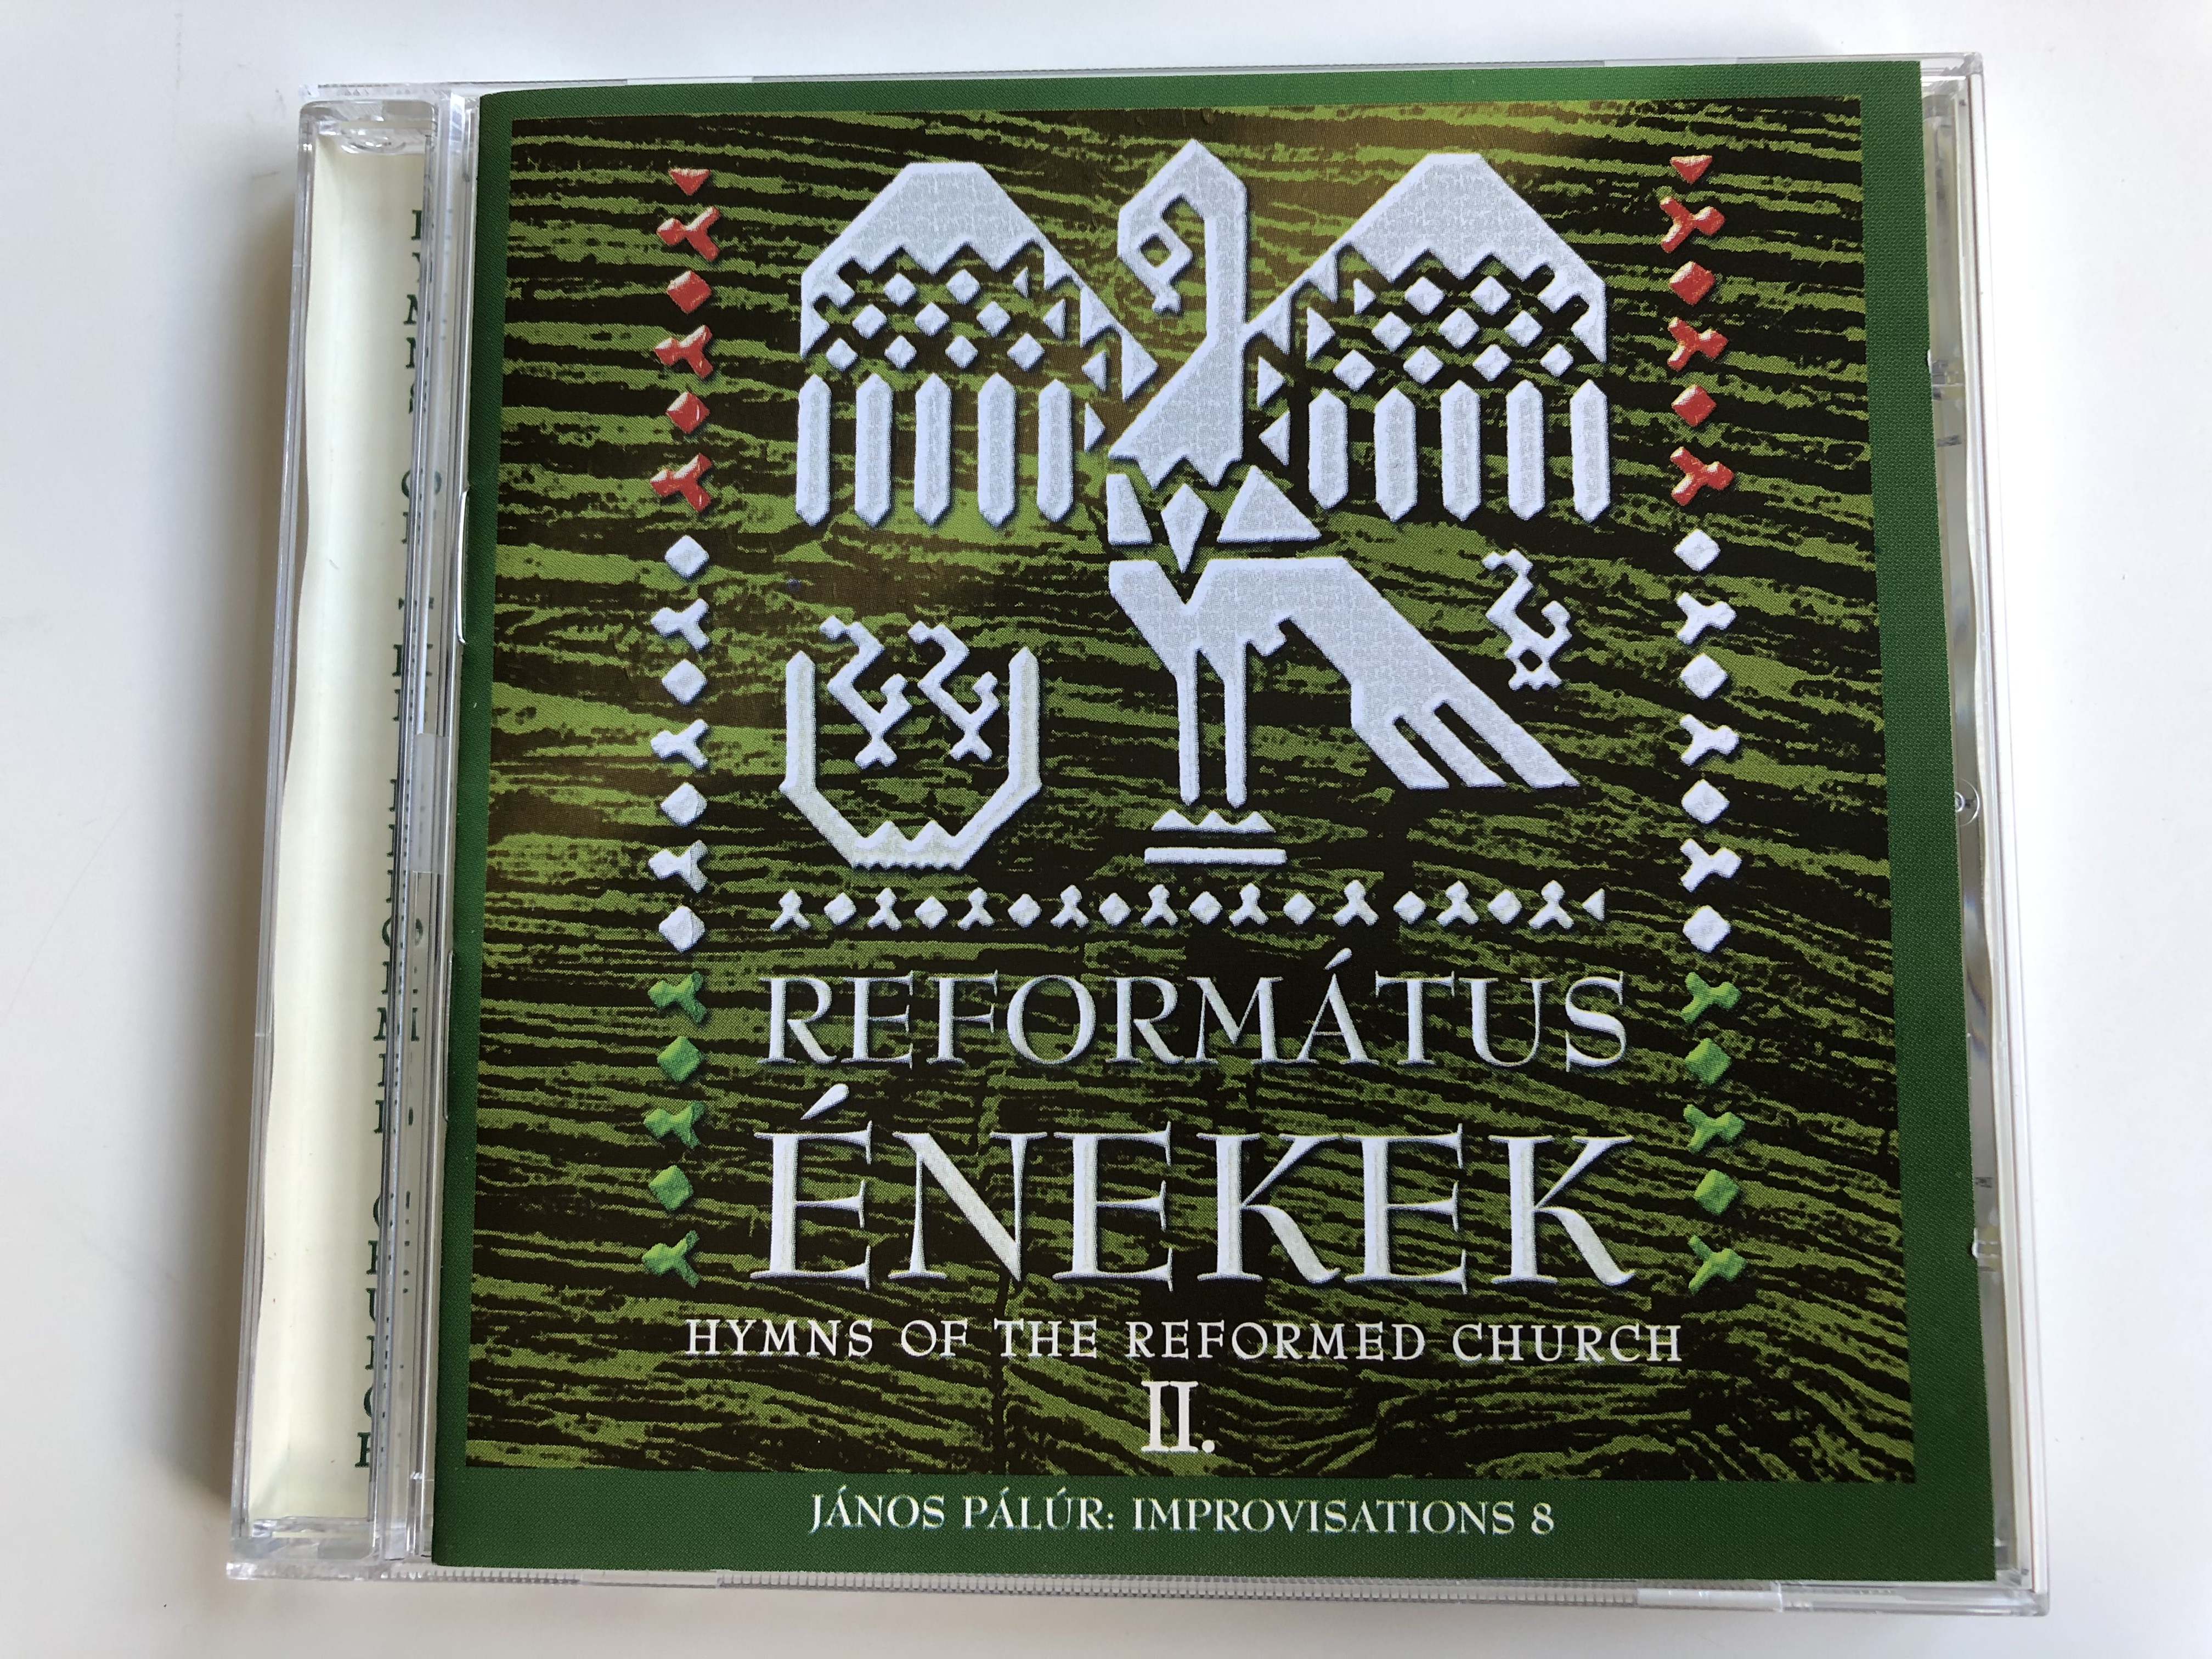 reform-tus-nekek-ii.-hymns-of-the-reformed-church-janos-palur-improvisations-8-periferic-records-audio-cd-2003-bgcd-124-1-.jpg